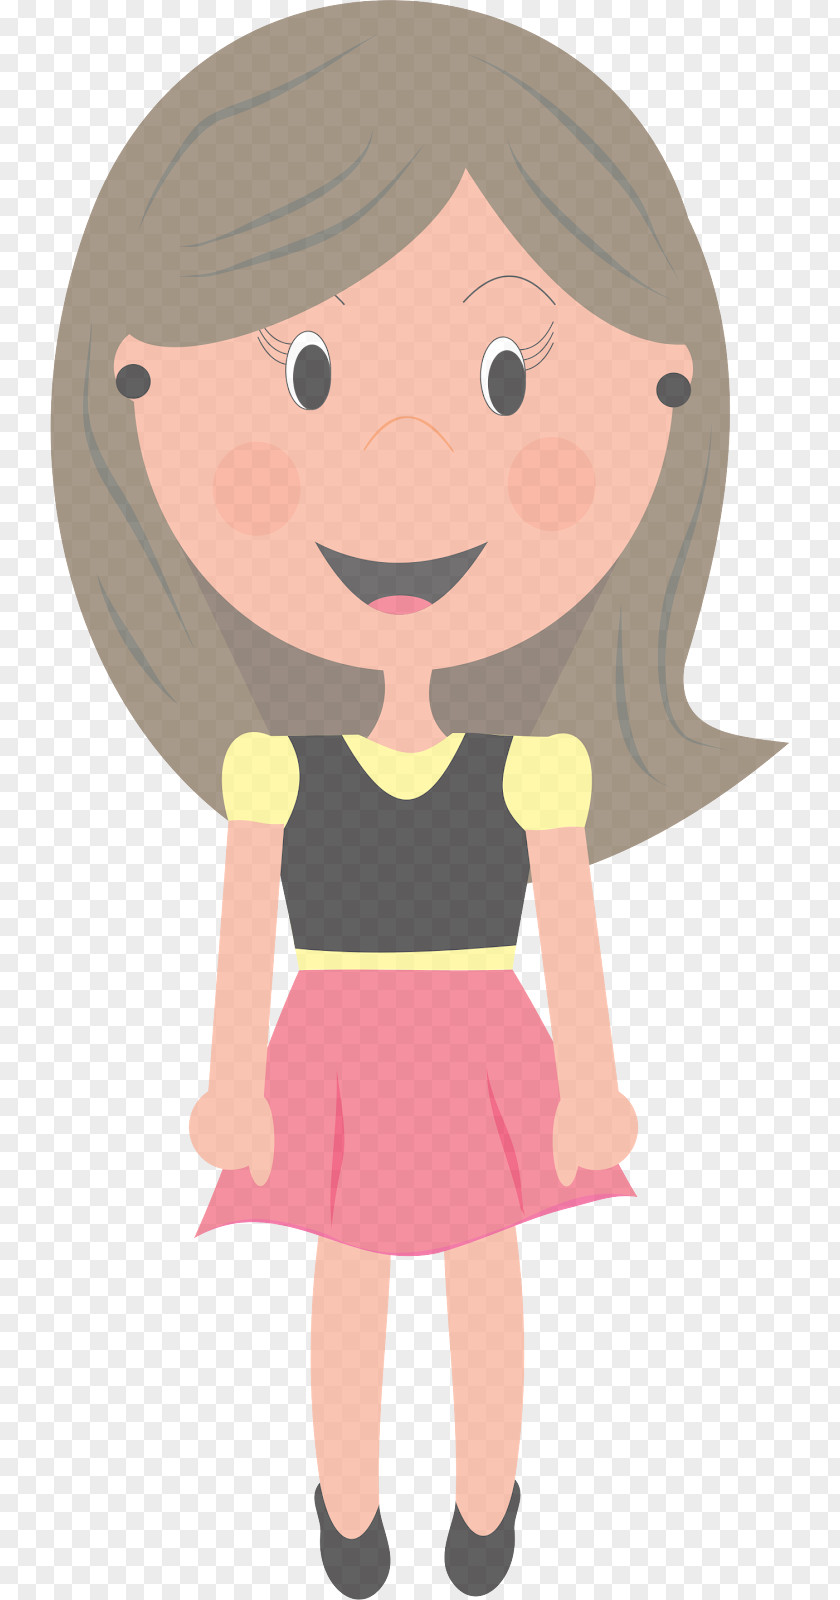 Smile Animation Cartoon Clip Art Pink Cheek Gesture PNG